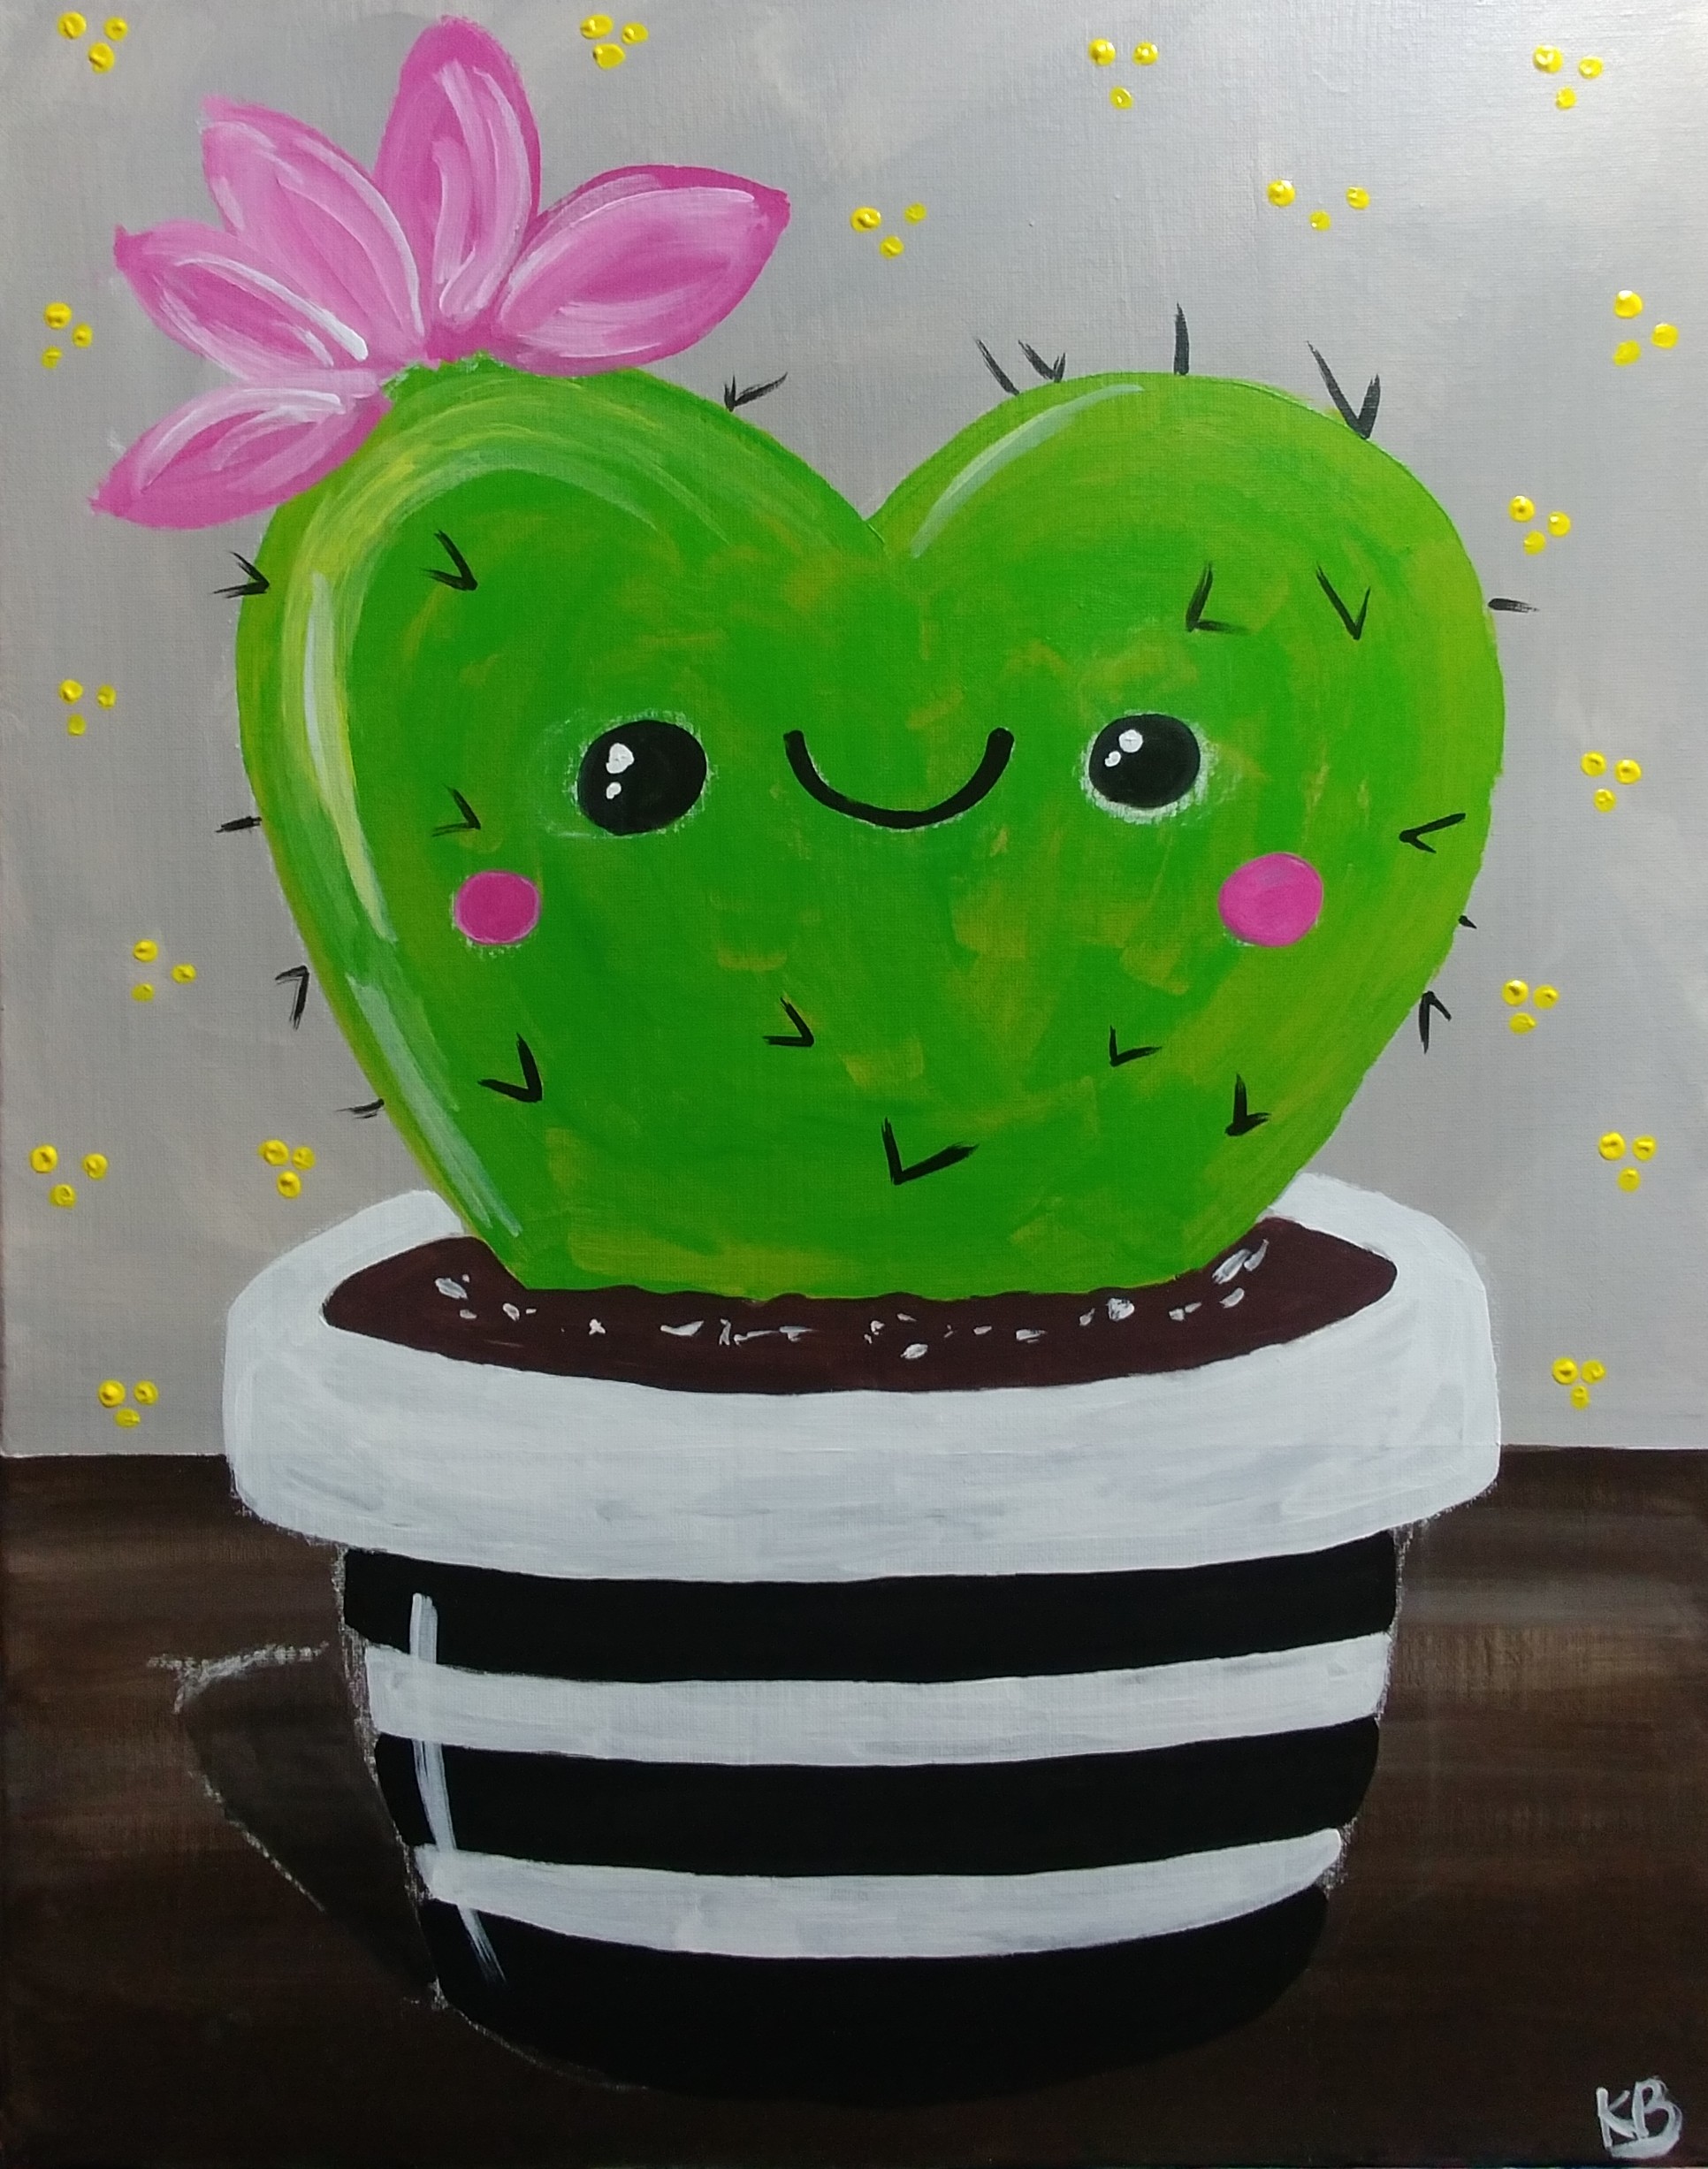 April 24th 10 a.m. Happy Cactus